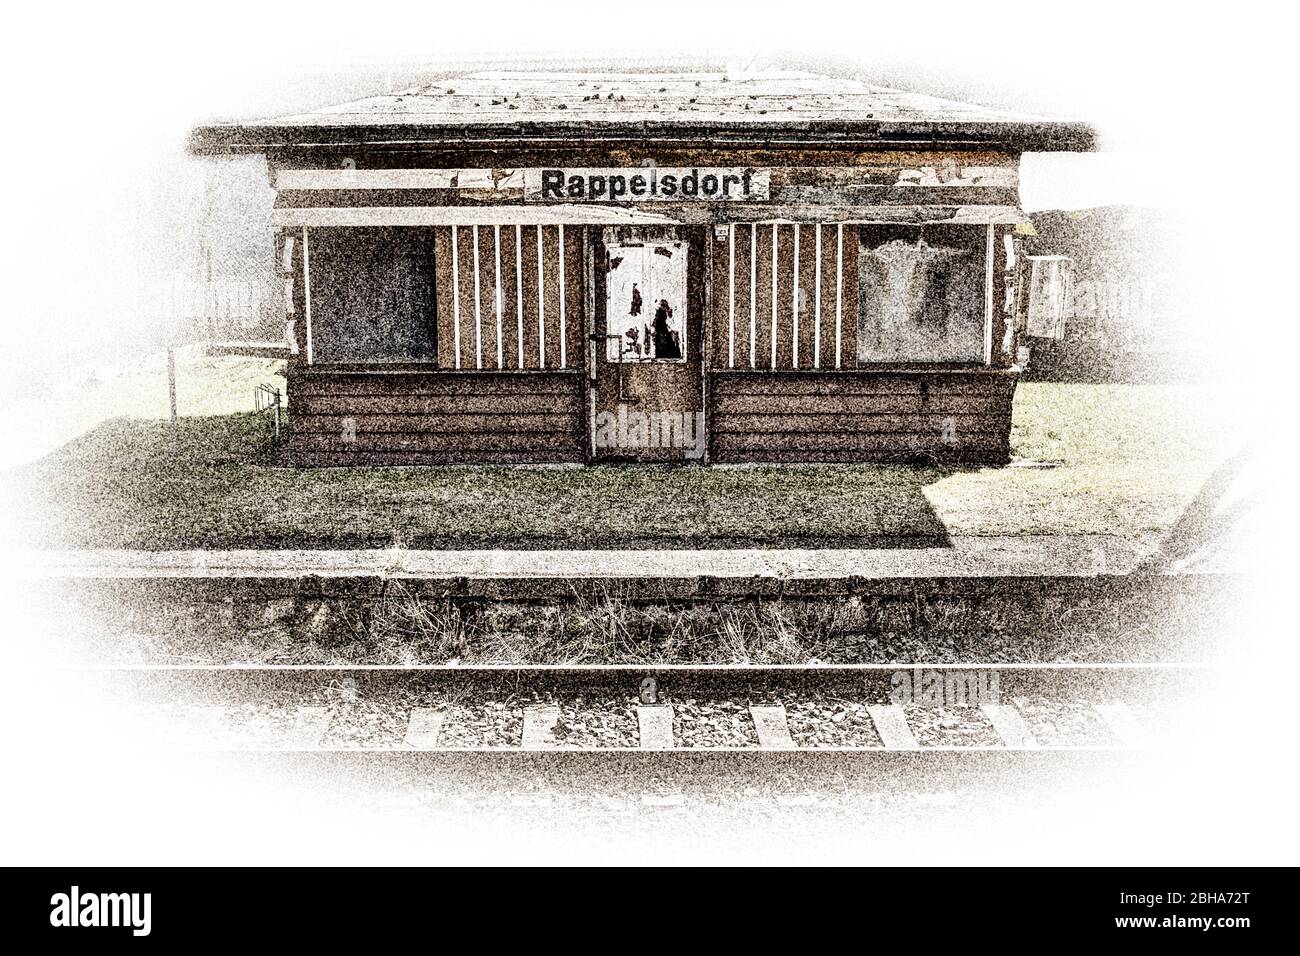 Track, platform, house, facade, station sign, ailing, digitally edited, High Key, RailArt Stock Photo